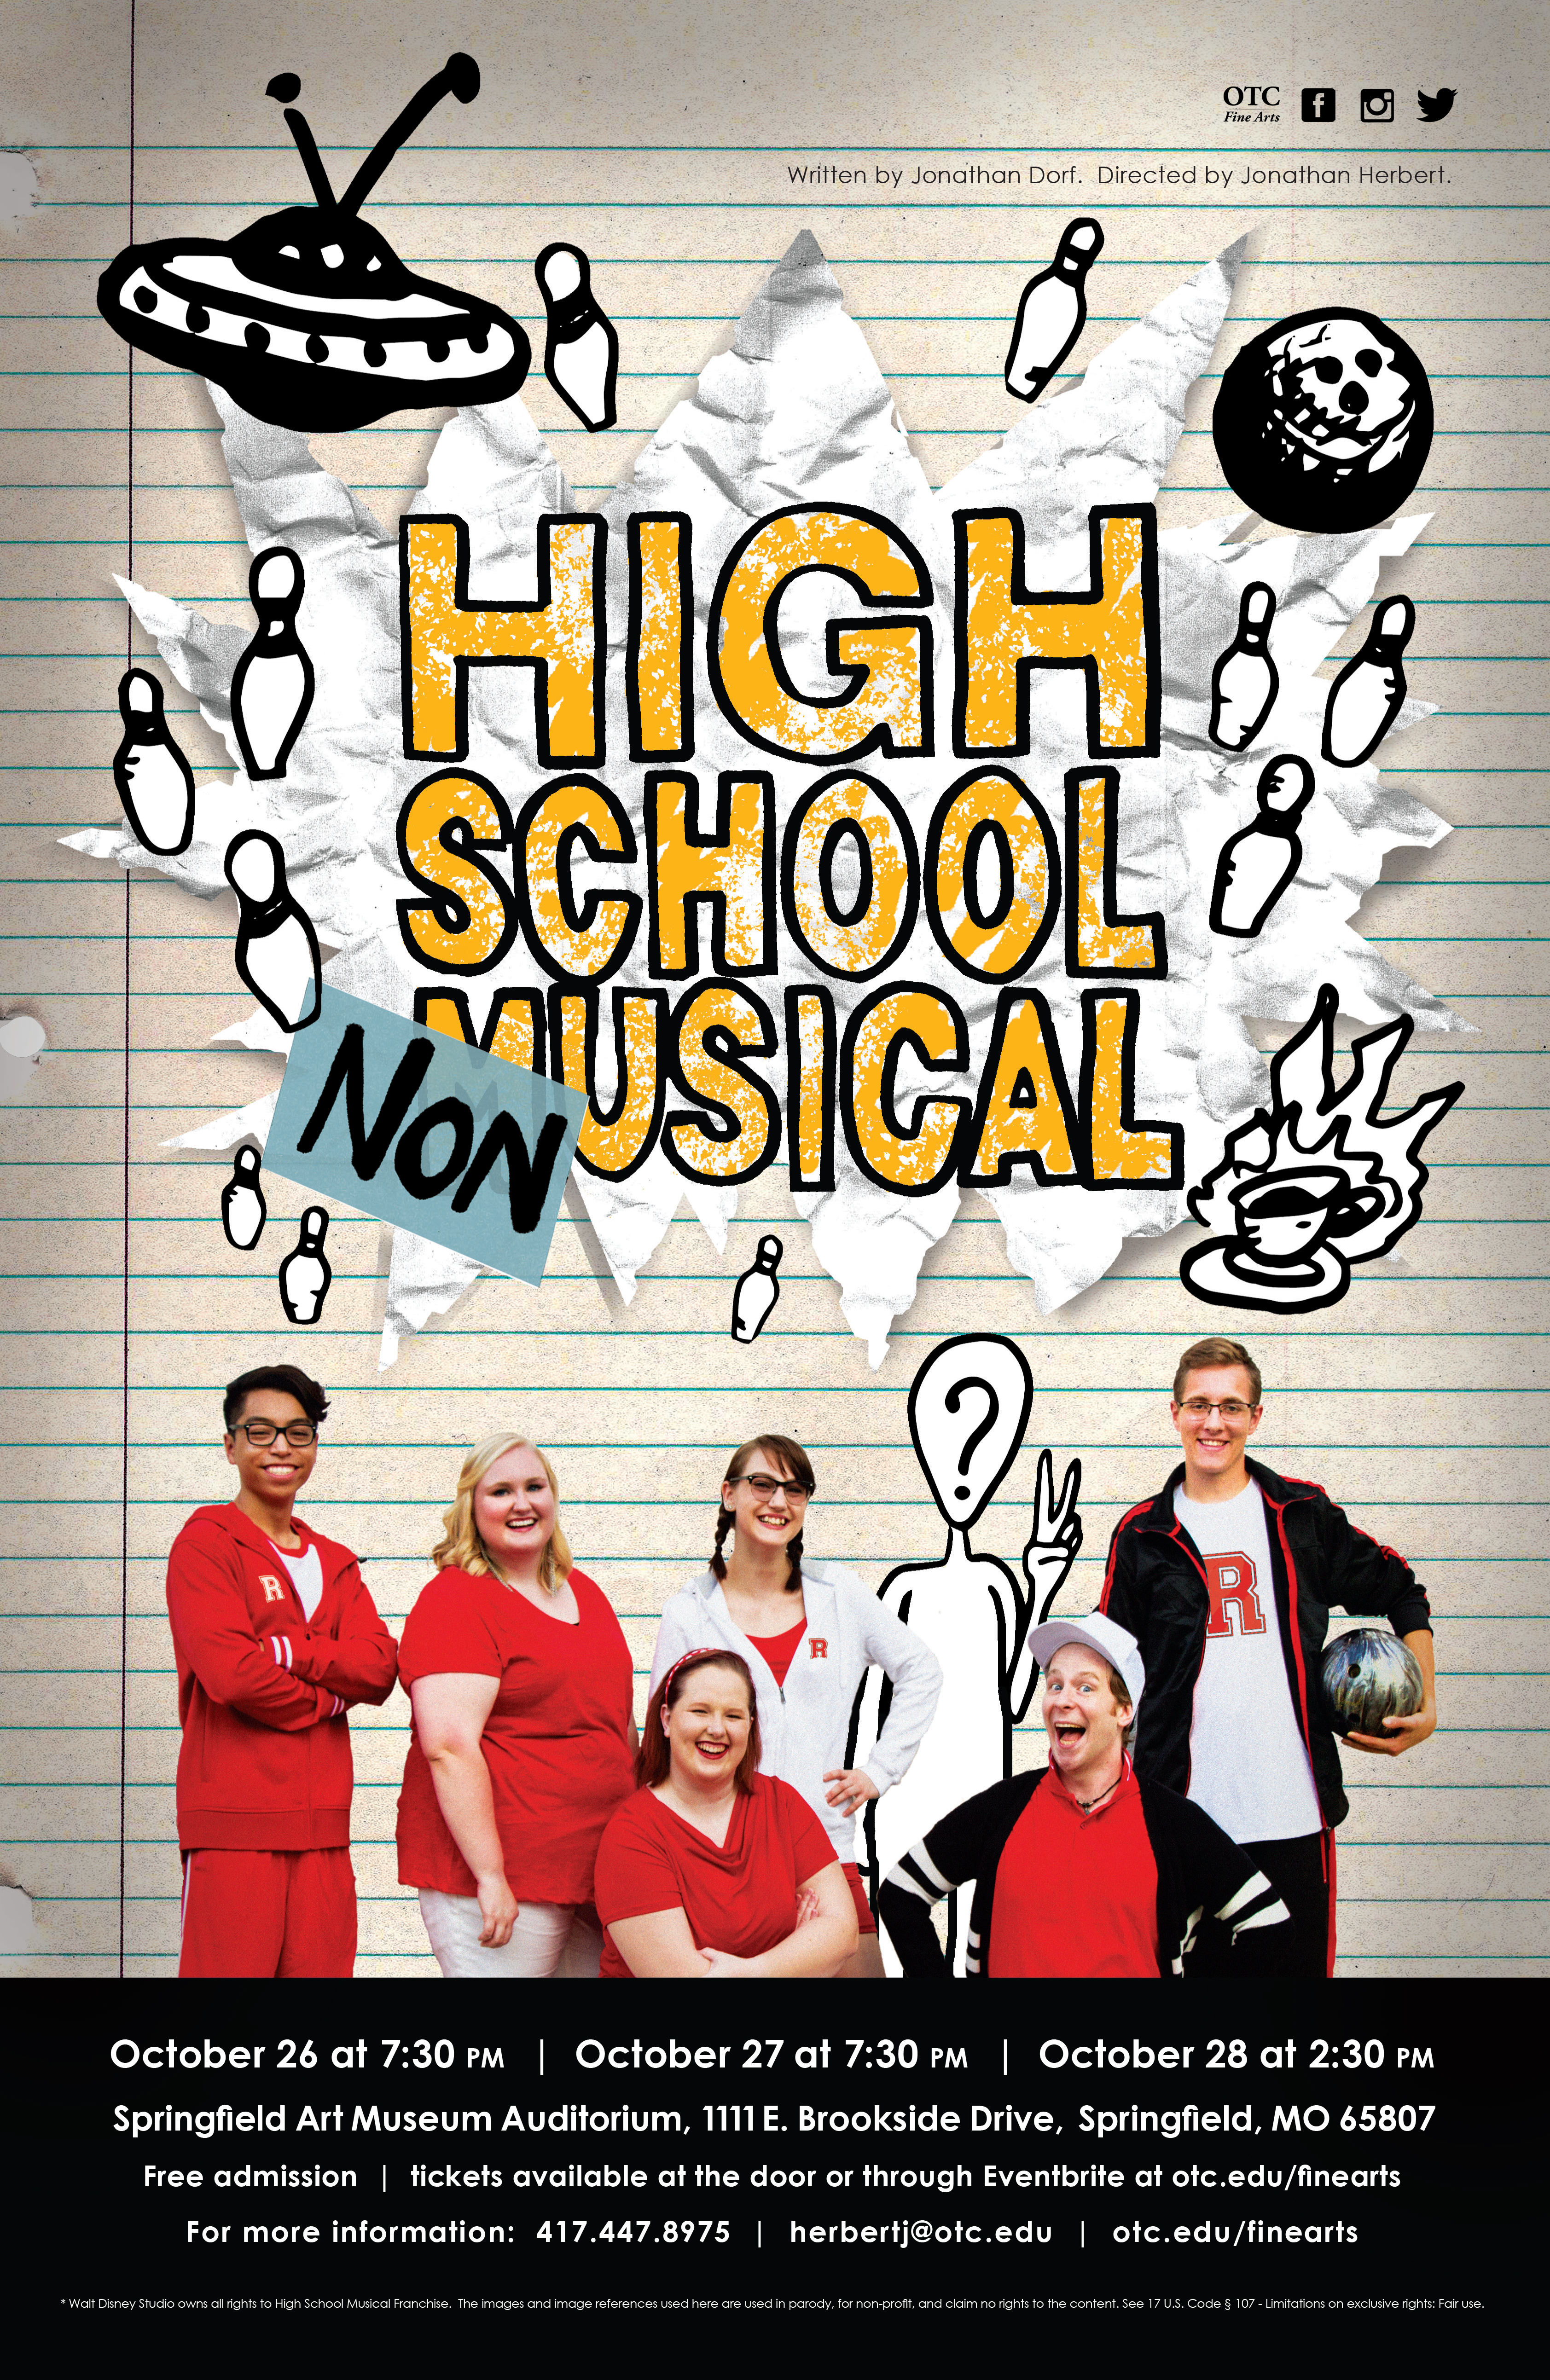 High School Non-Musical Official Poster